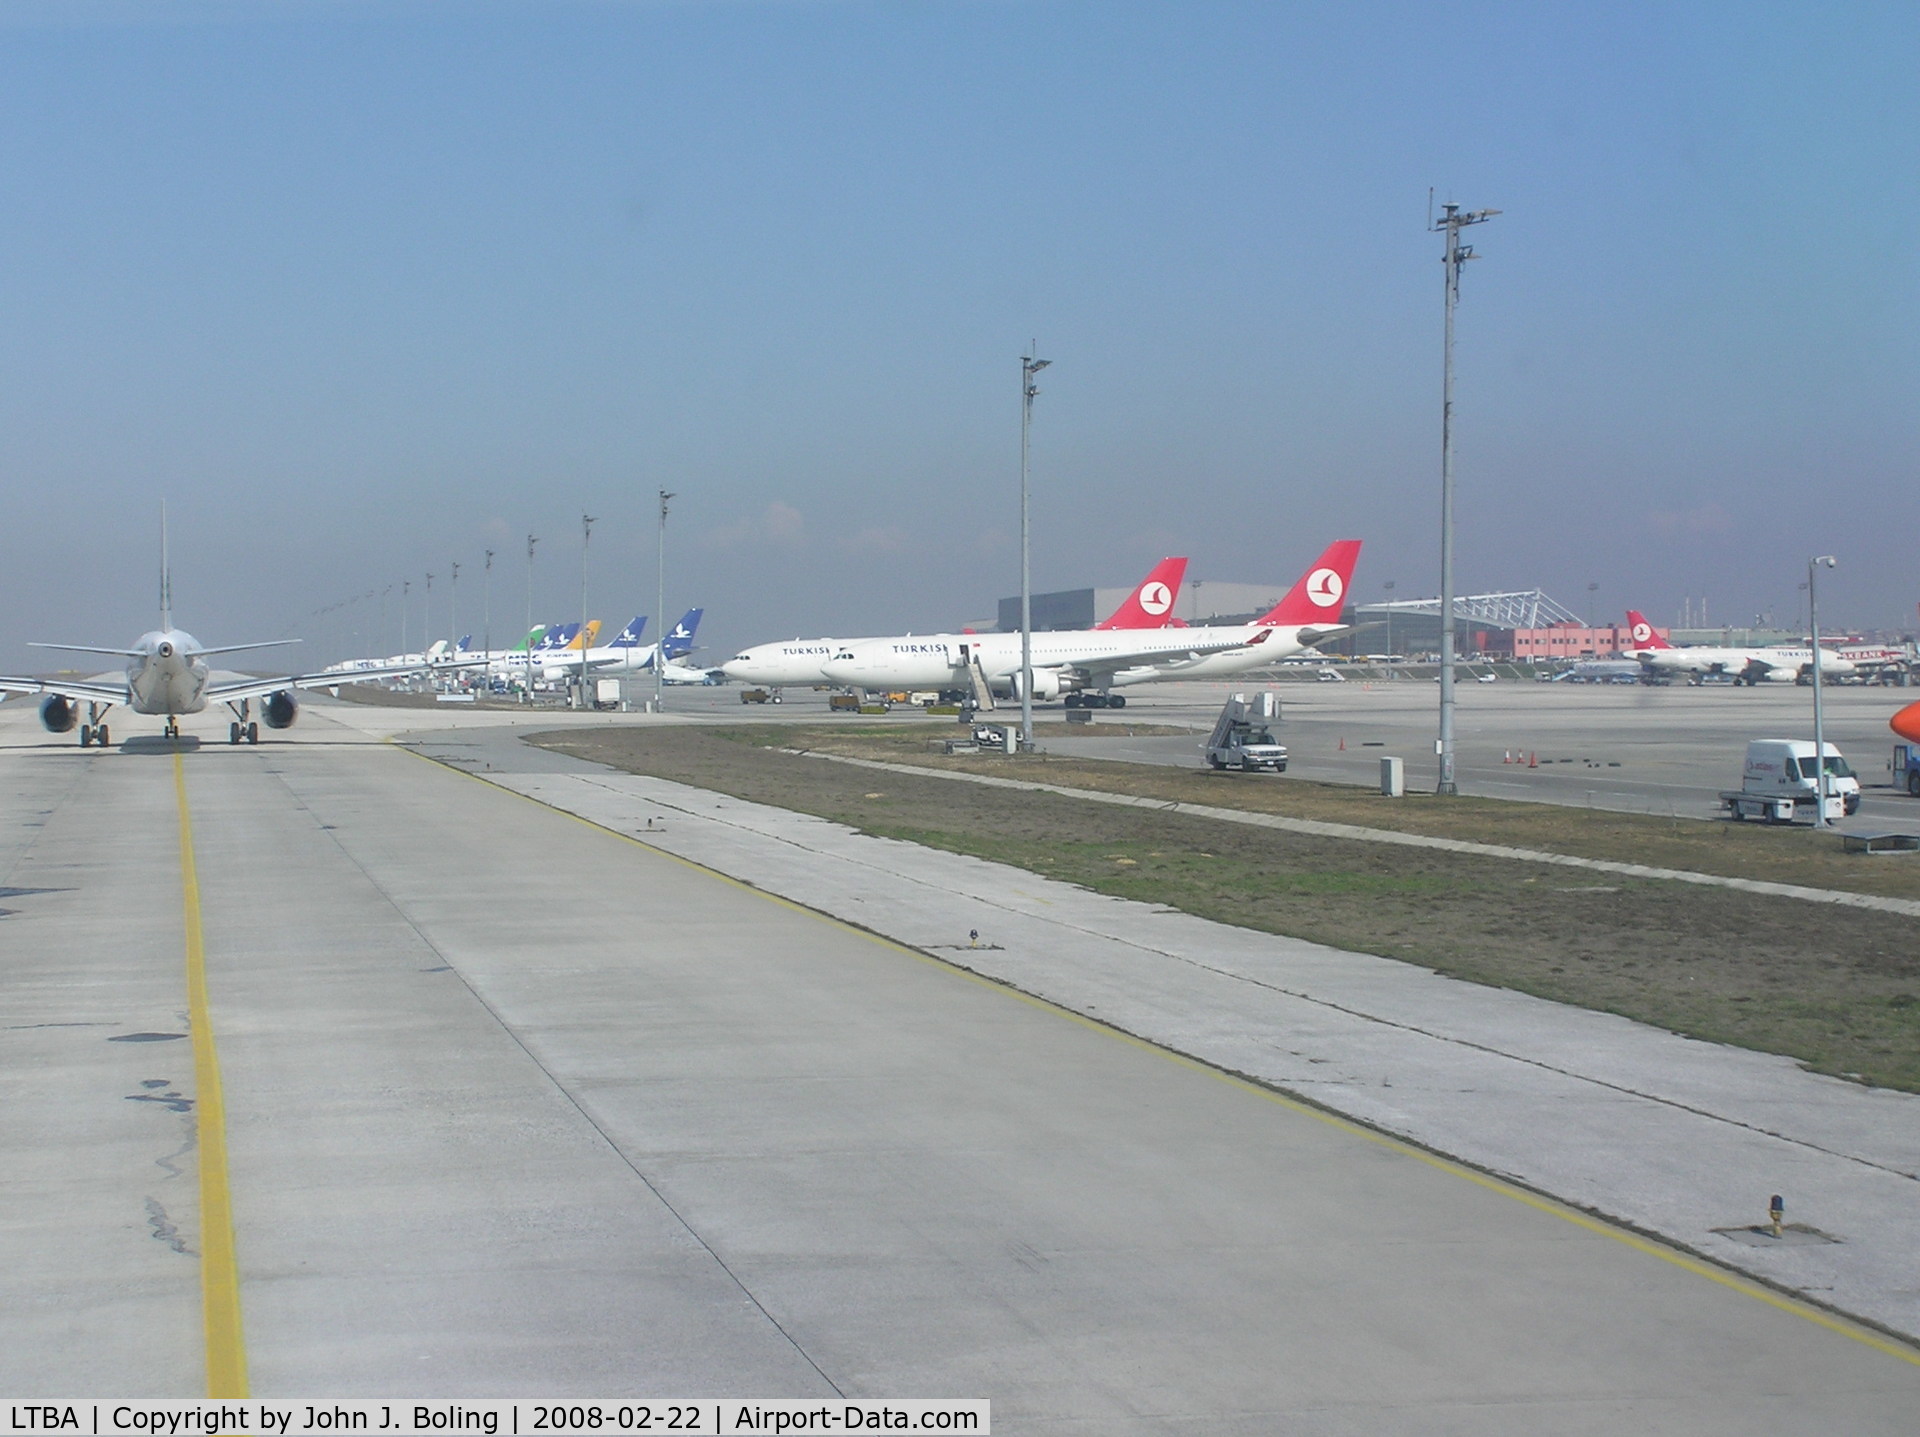 Istanbul Atatürk International Airport, Istanbul Turkey (LTBA) - North ramp at Ataturk Airport, Istanbul